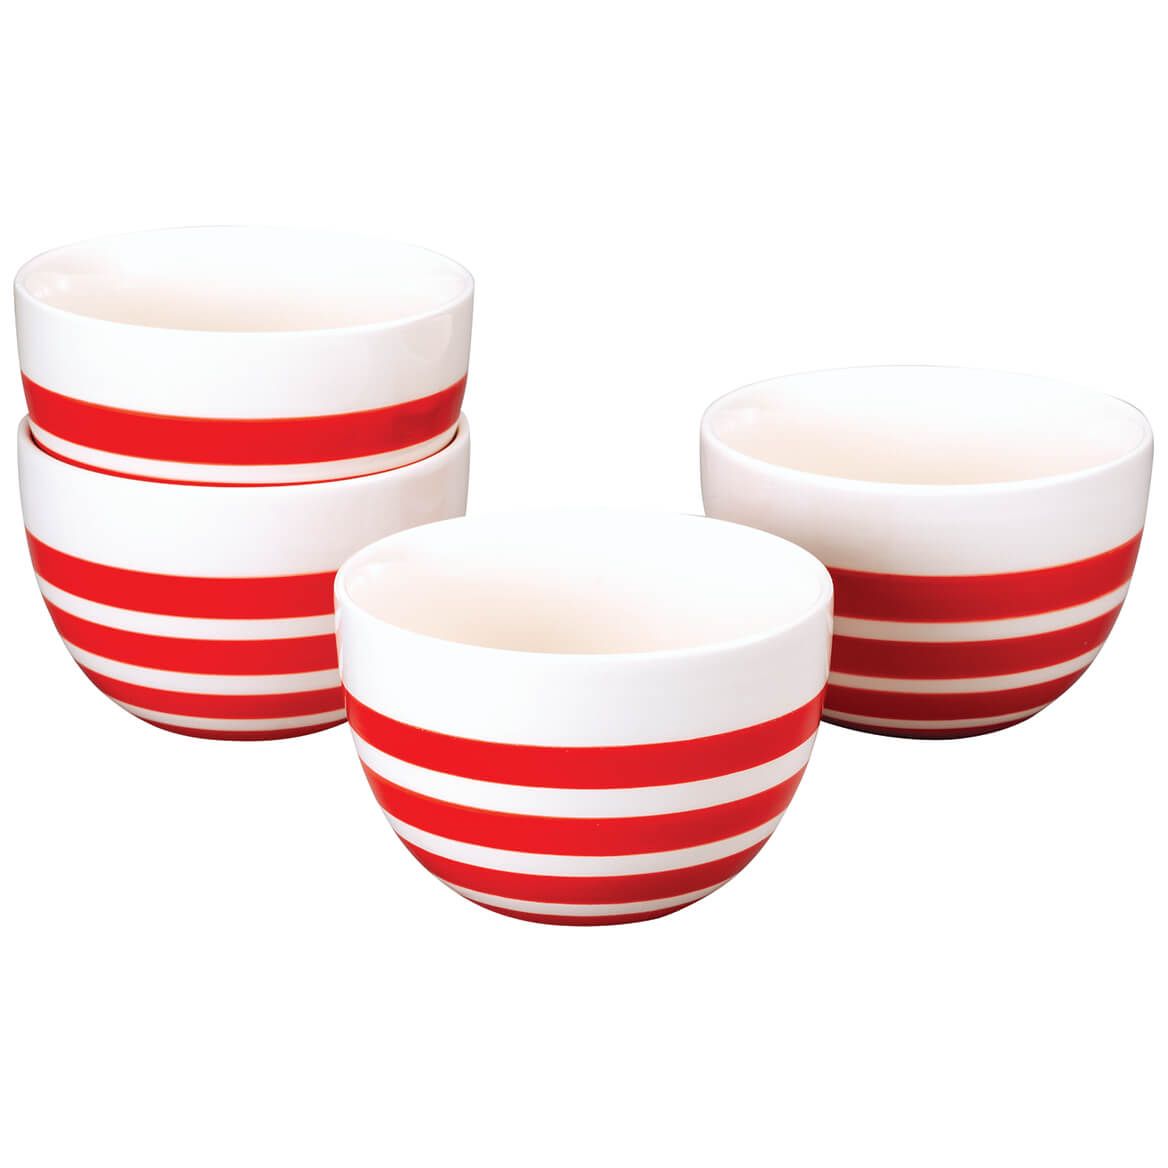 All-Purpose Ceramic Bowls, Set of 4 + '-' + 370743